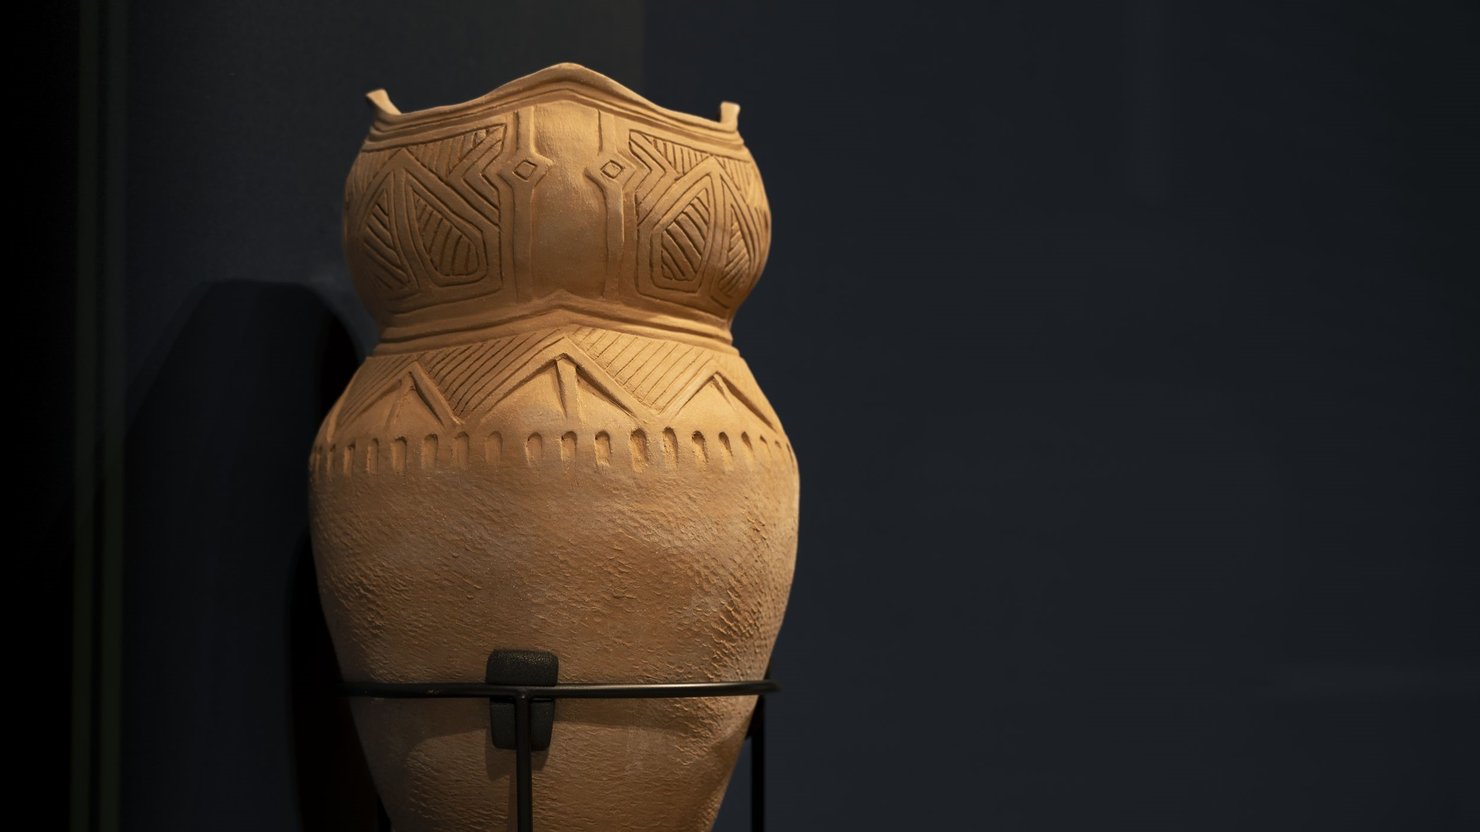 ceramic vase by Mashpee Wampanoag artist Ramona Peters